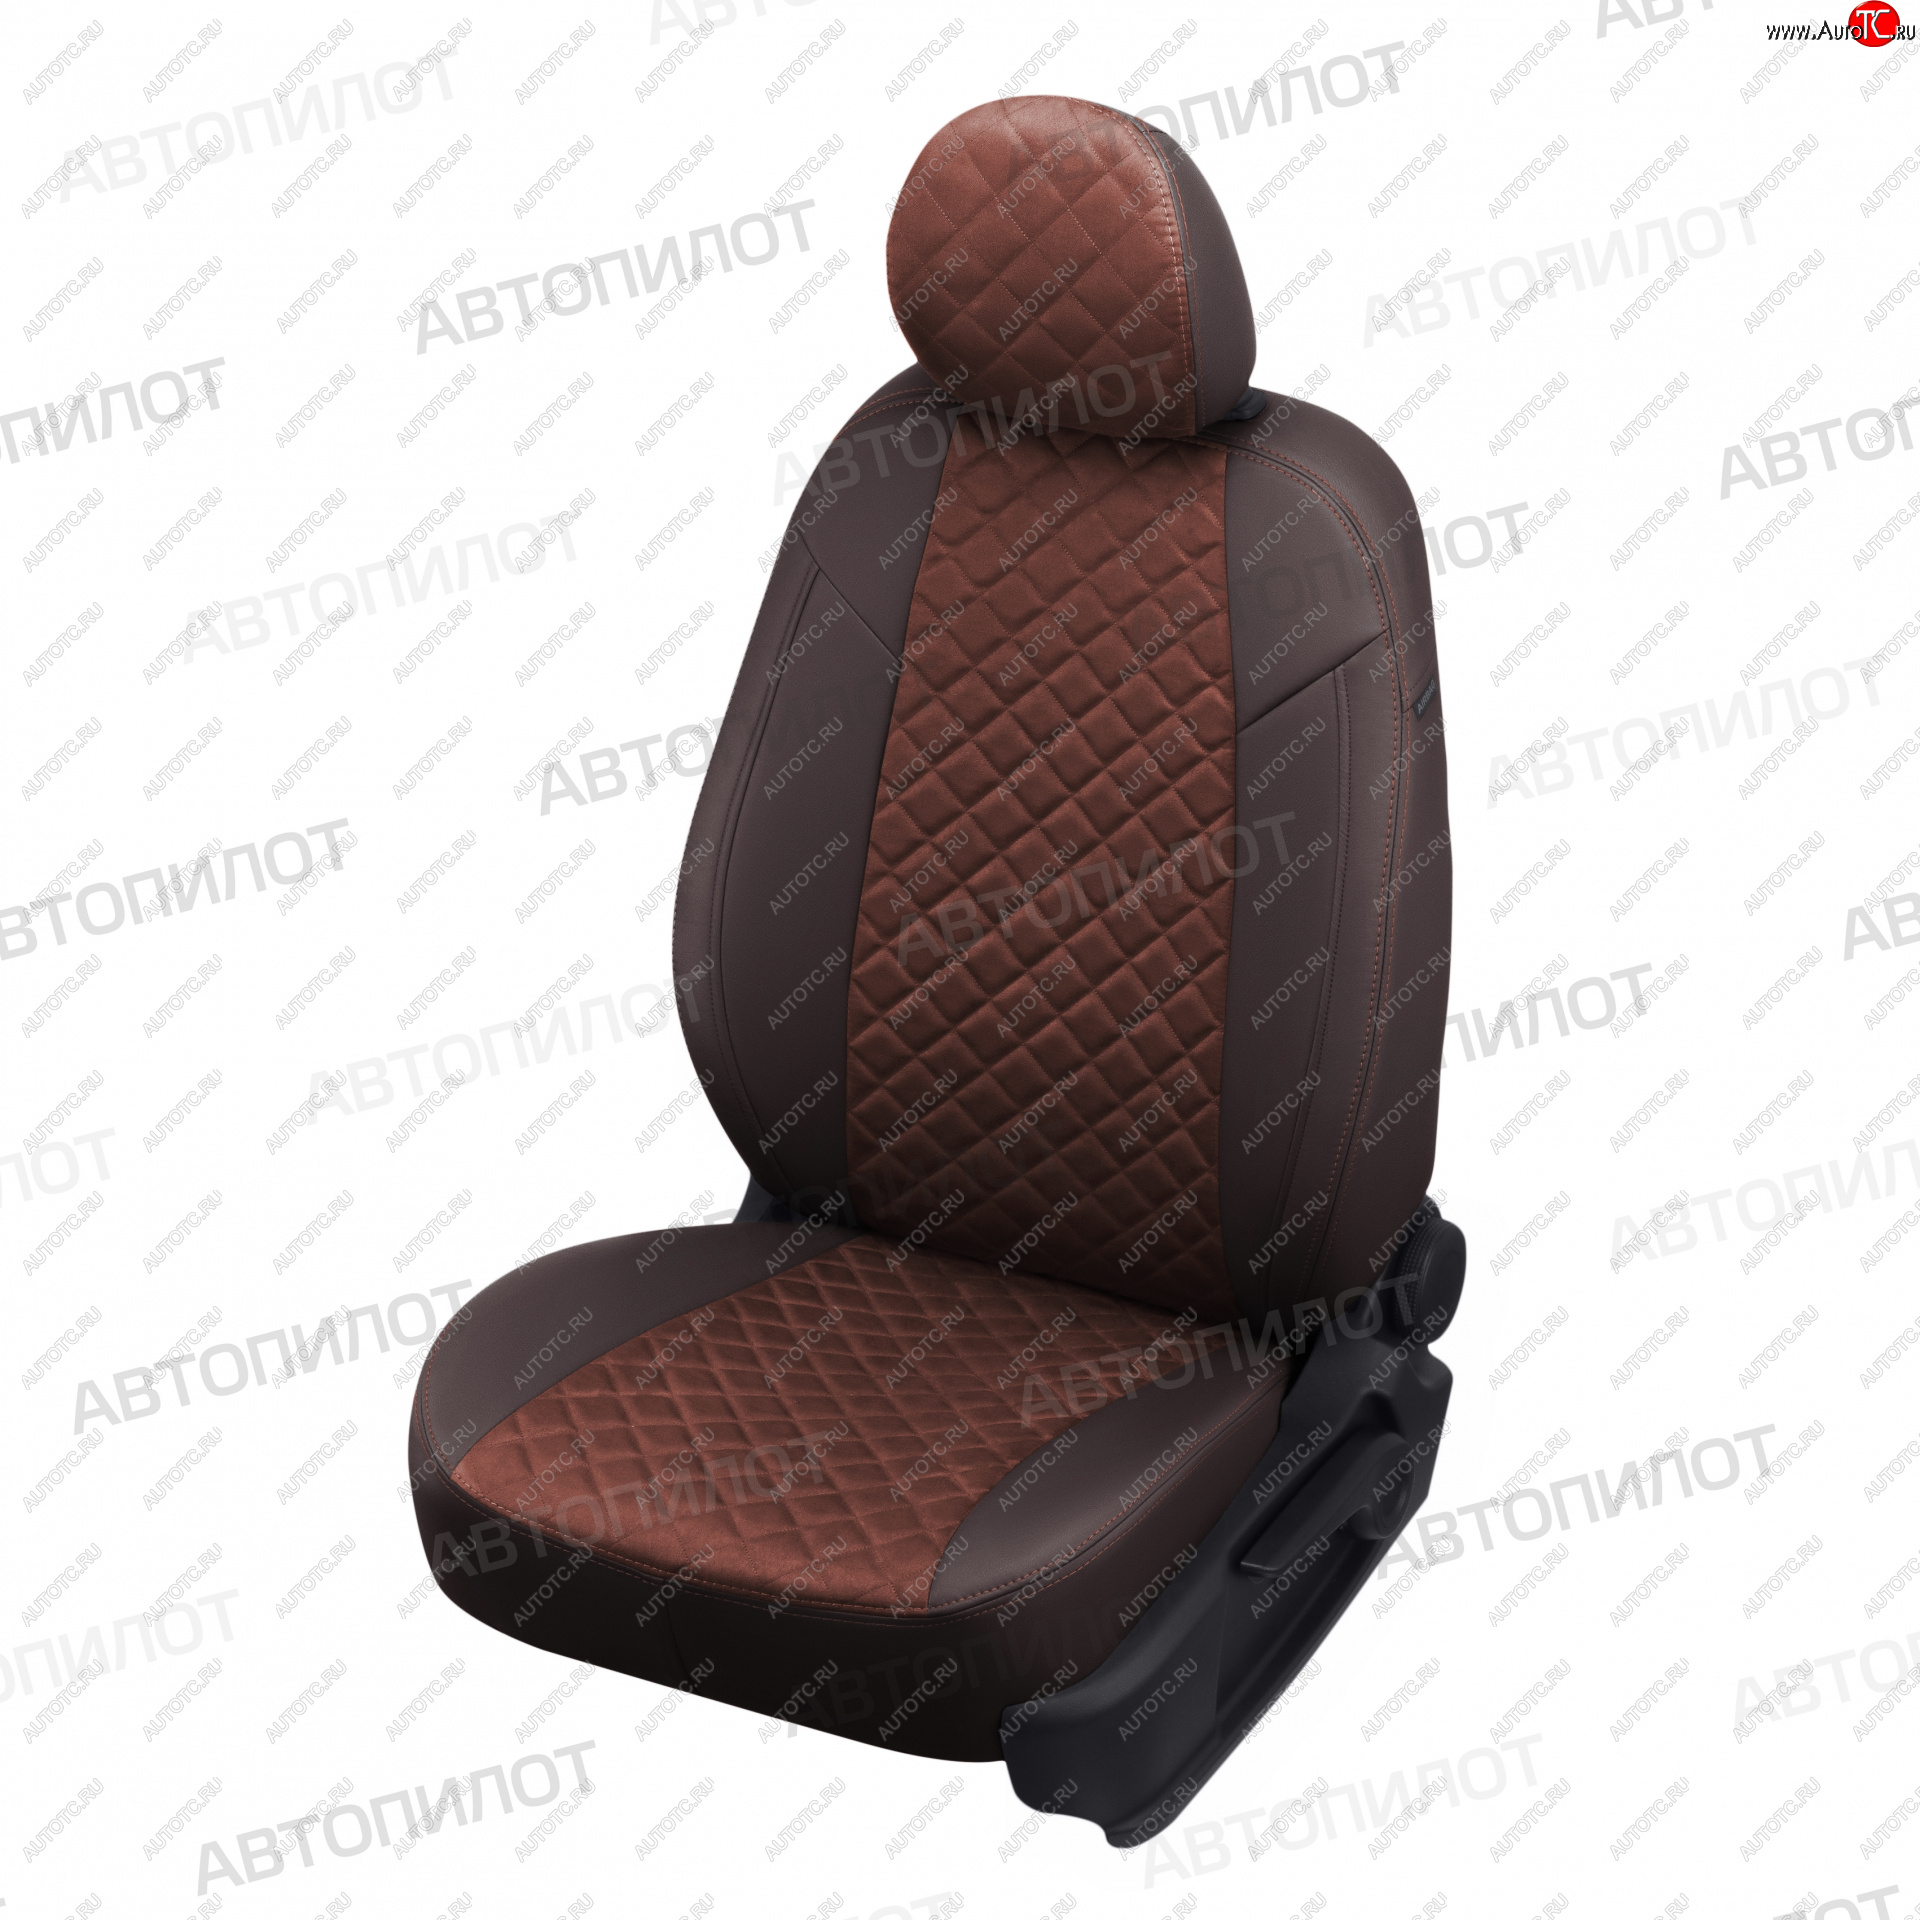 13 999 р. Чехлы сидений (экокожа/алькатара) Автопилот Ромб  KIA Cerato  2 TD (2008-2013) (шоколад)